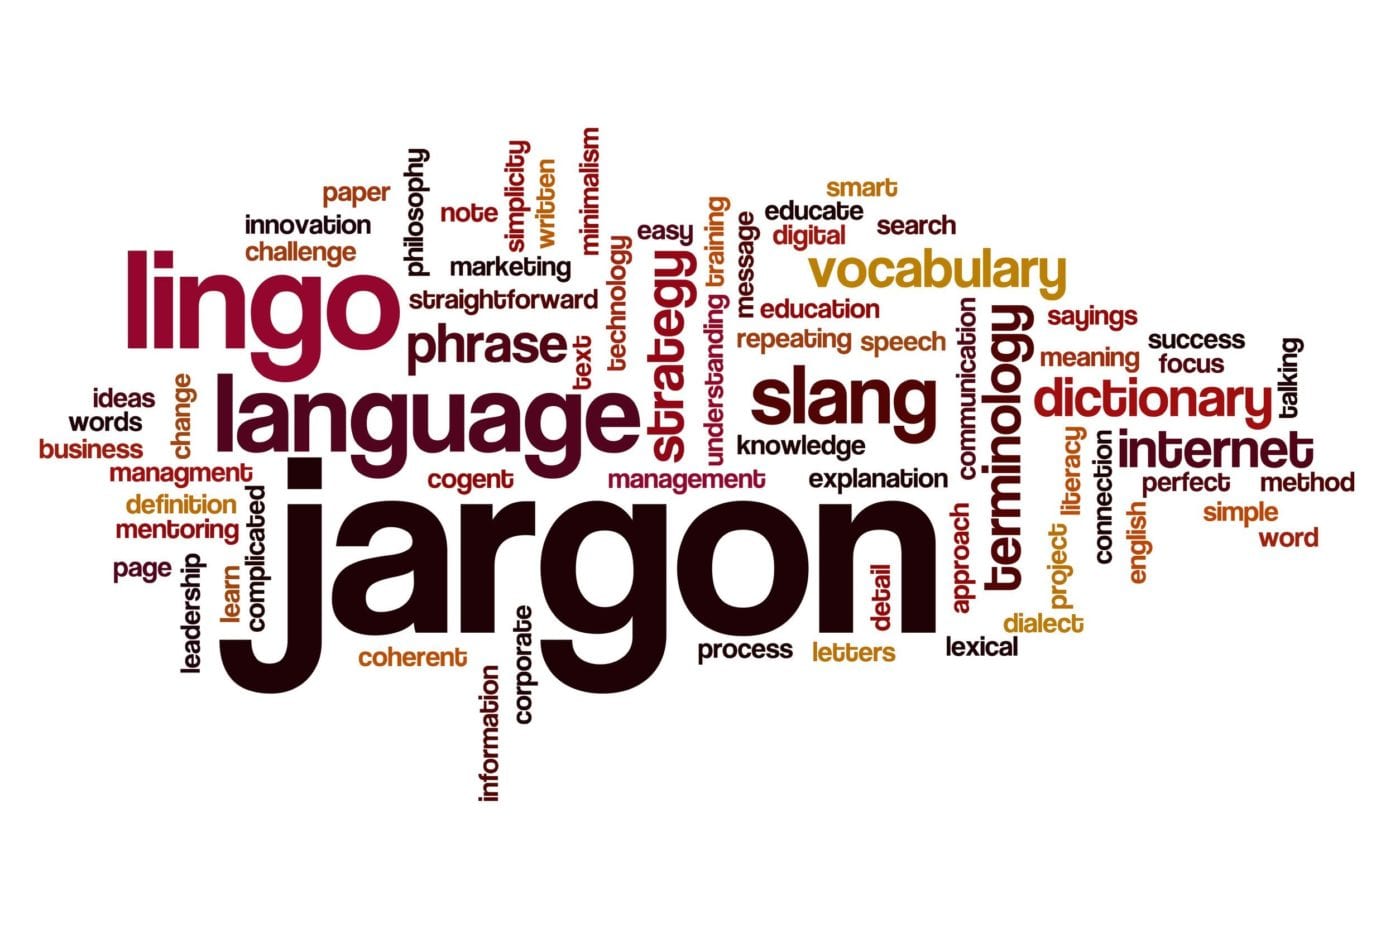 ‘Marketing jargon is a major career killer’